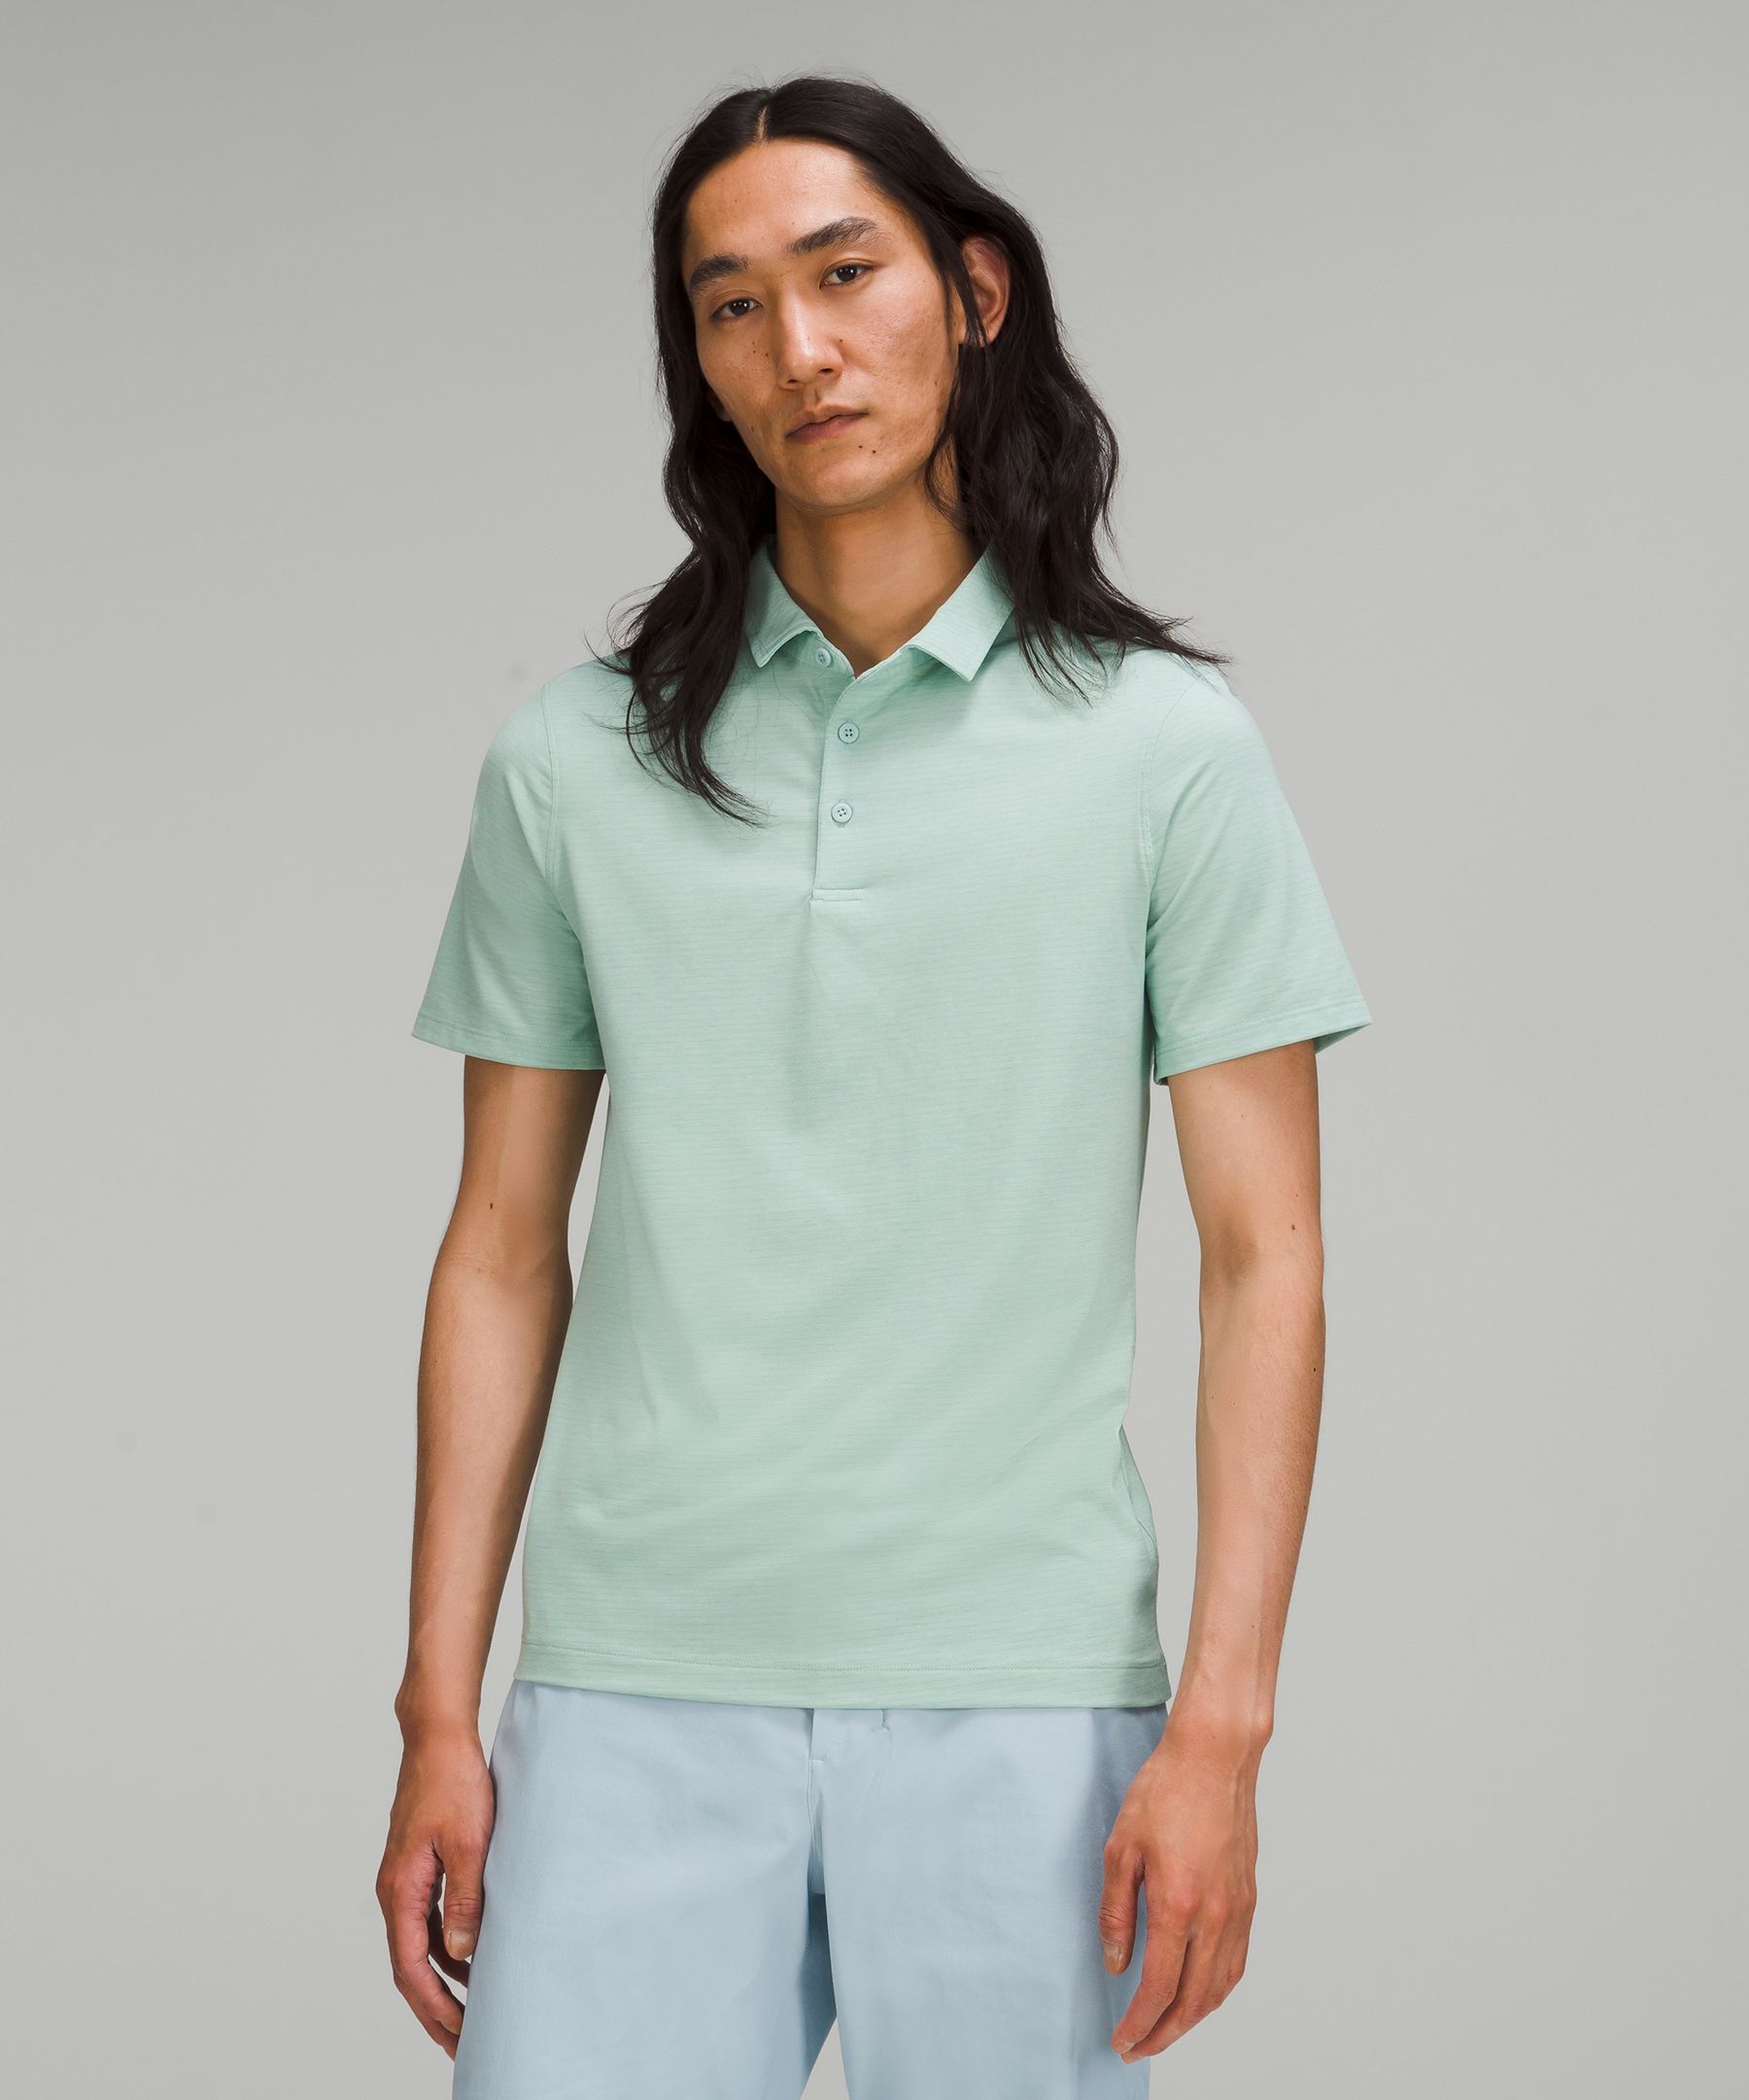 Lululemon Evolution Short Sleeve Polo Shirt In Heathered Arctic Green